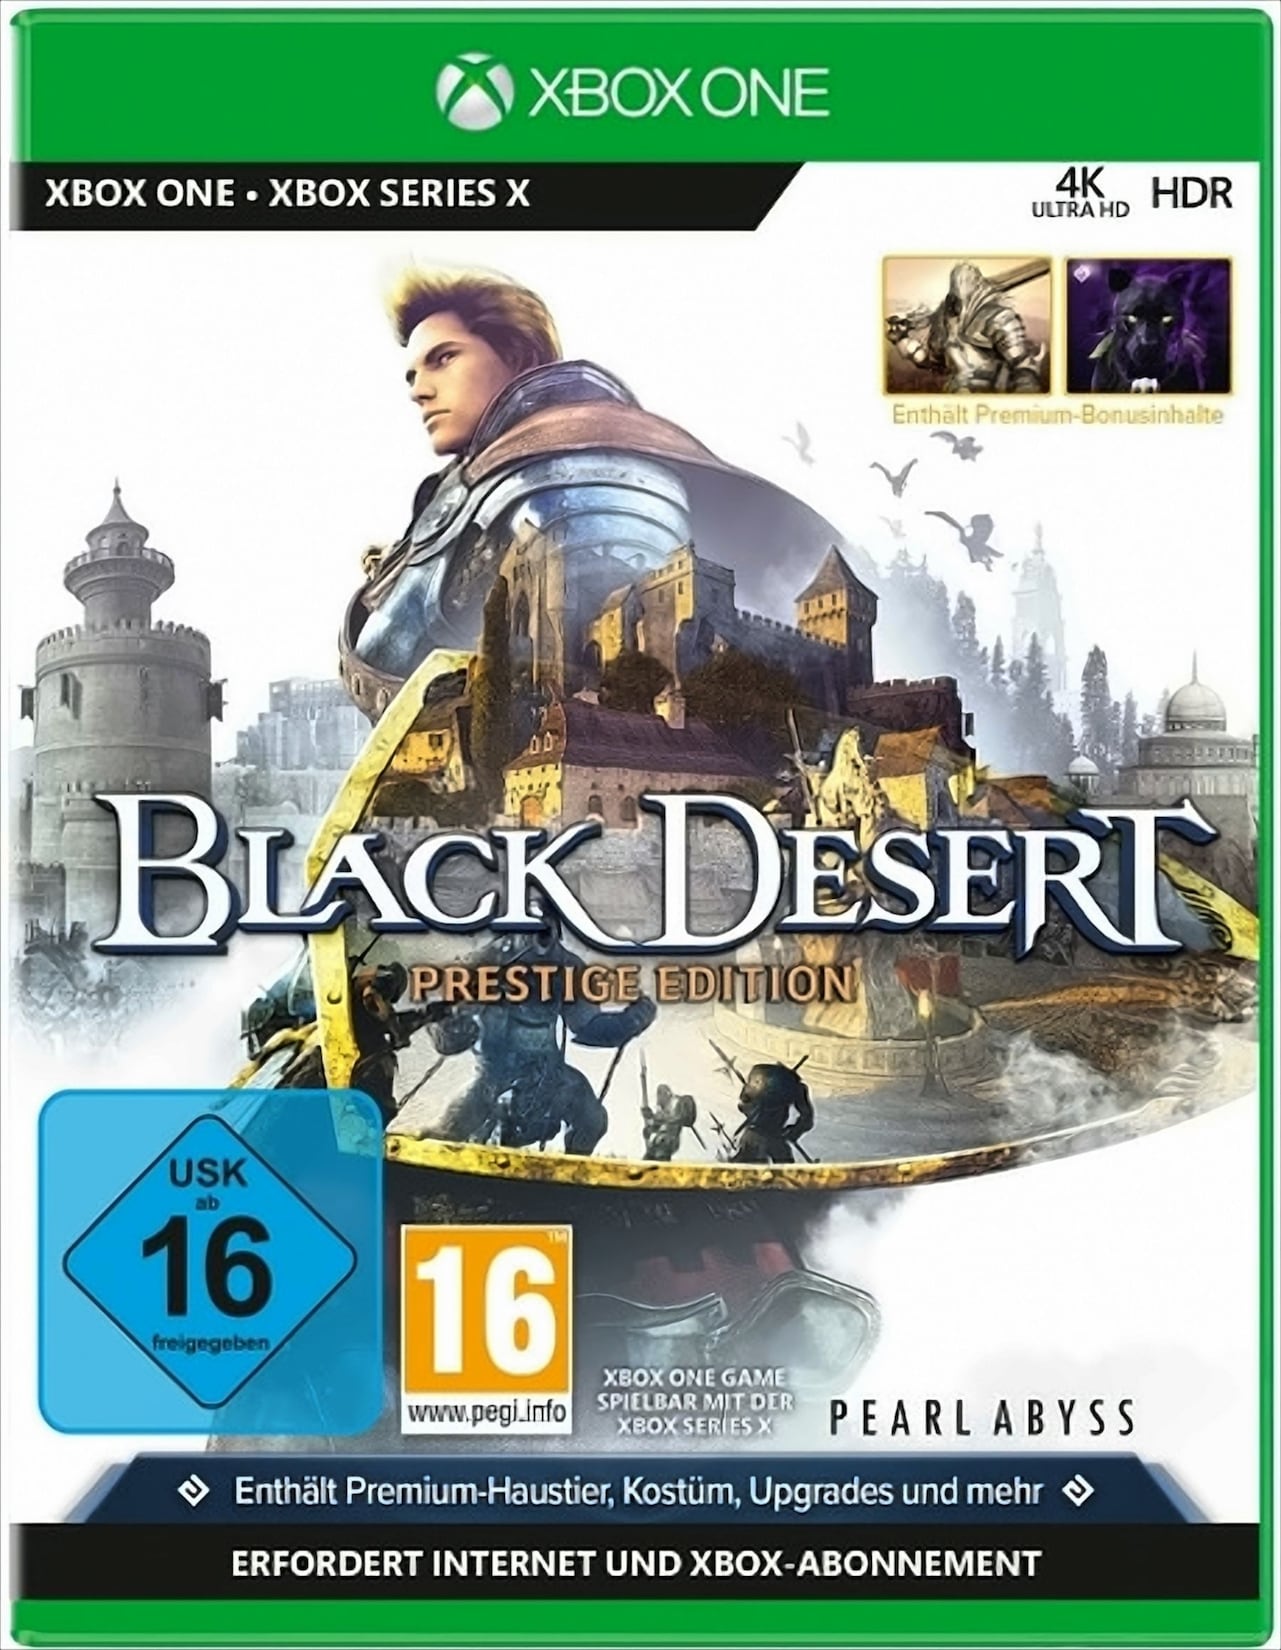 Black Desert Prestige Edition (XONE)